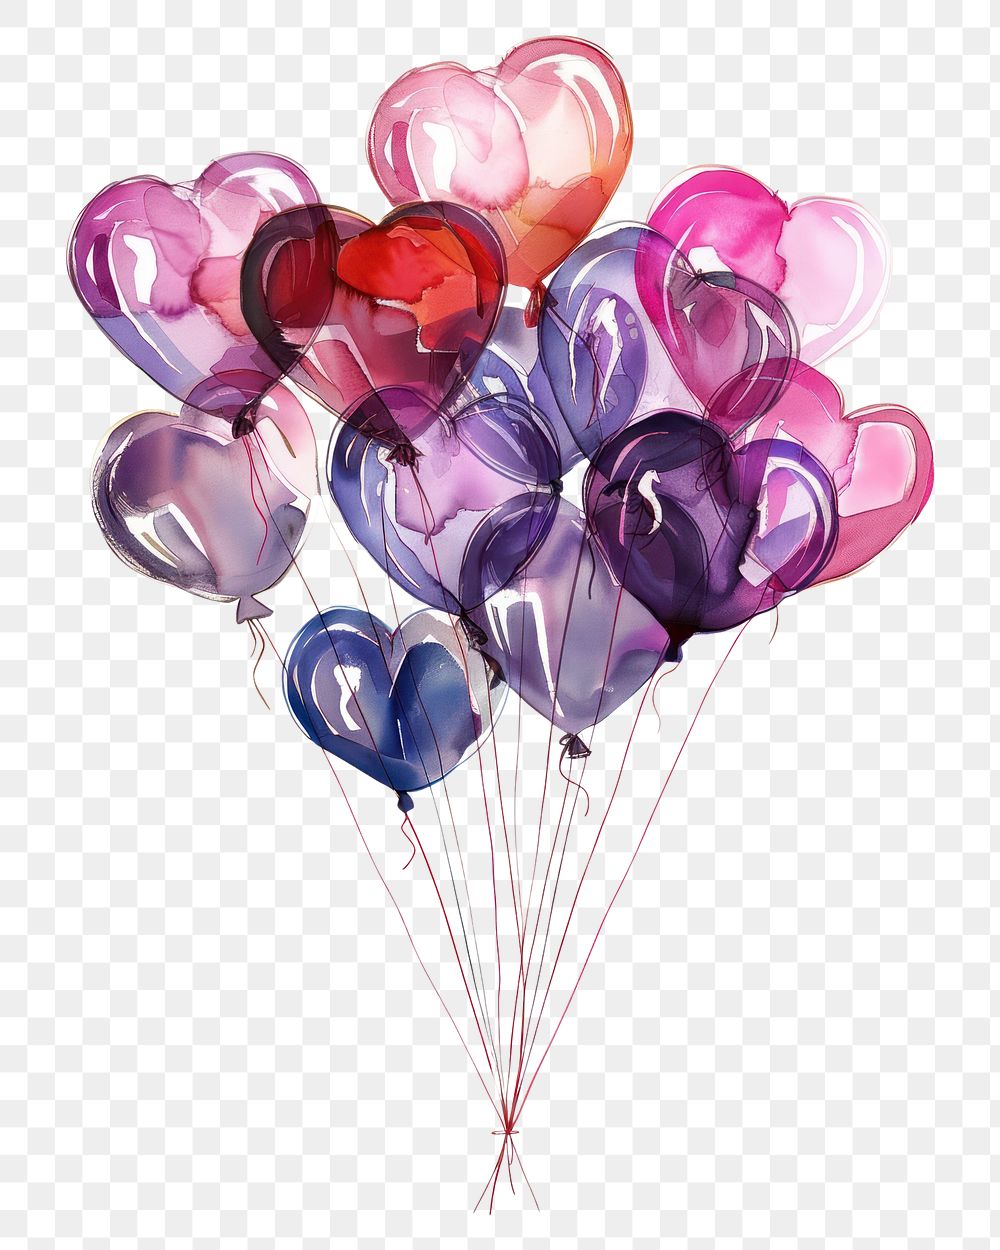 PNG Heart shape balloons white background celebration anniversary.